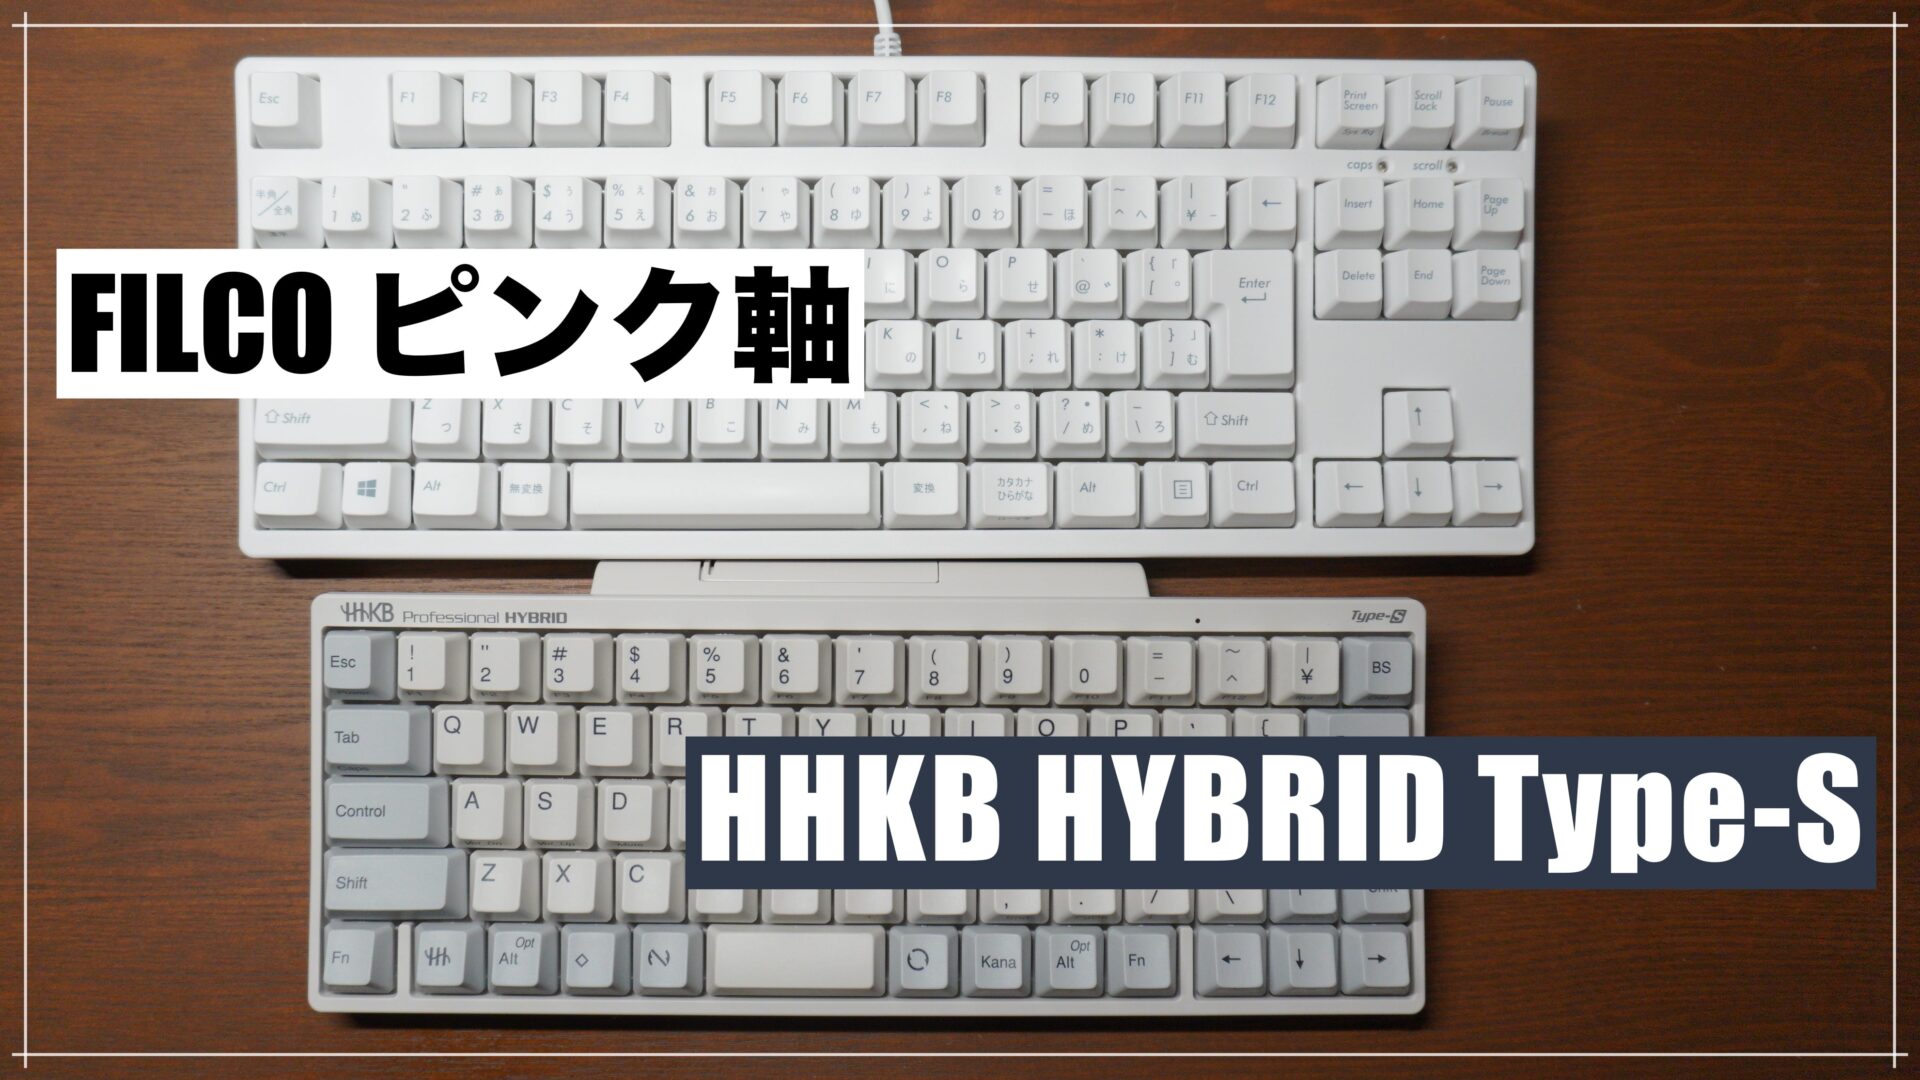 PC/タブレット PCパーツ HHKB vs FILCO【打感、打鍵音の比較】PFU製 HHKB Professional HYBRID 